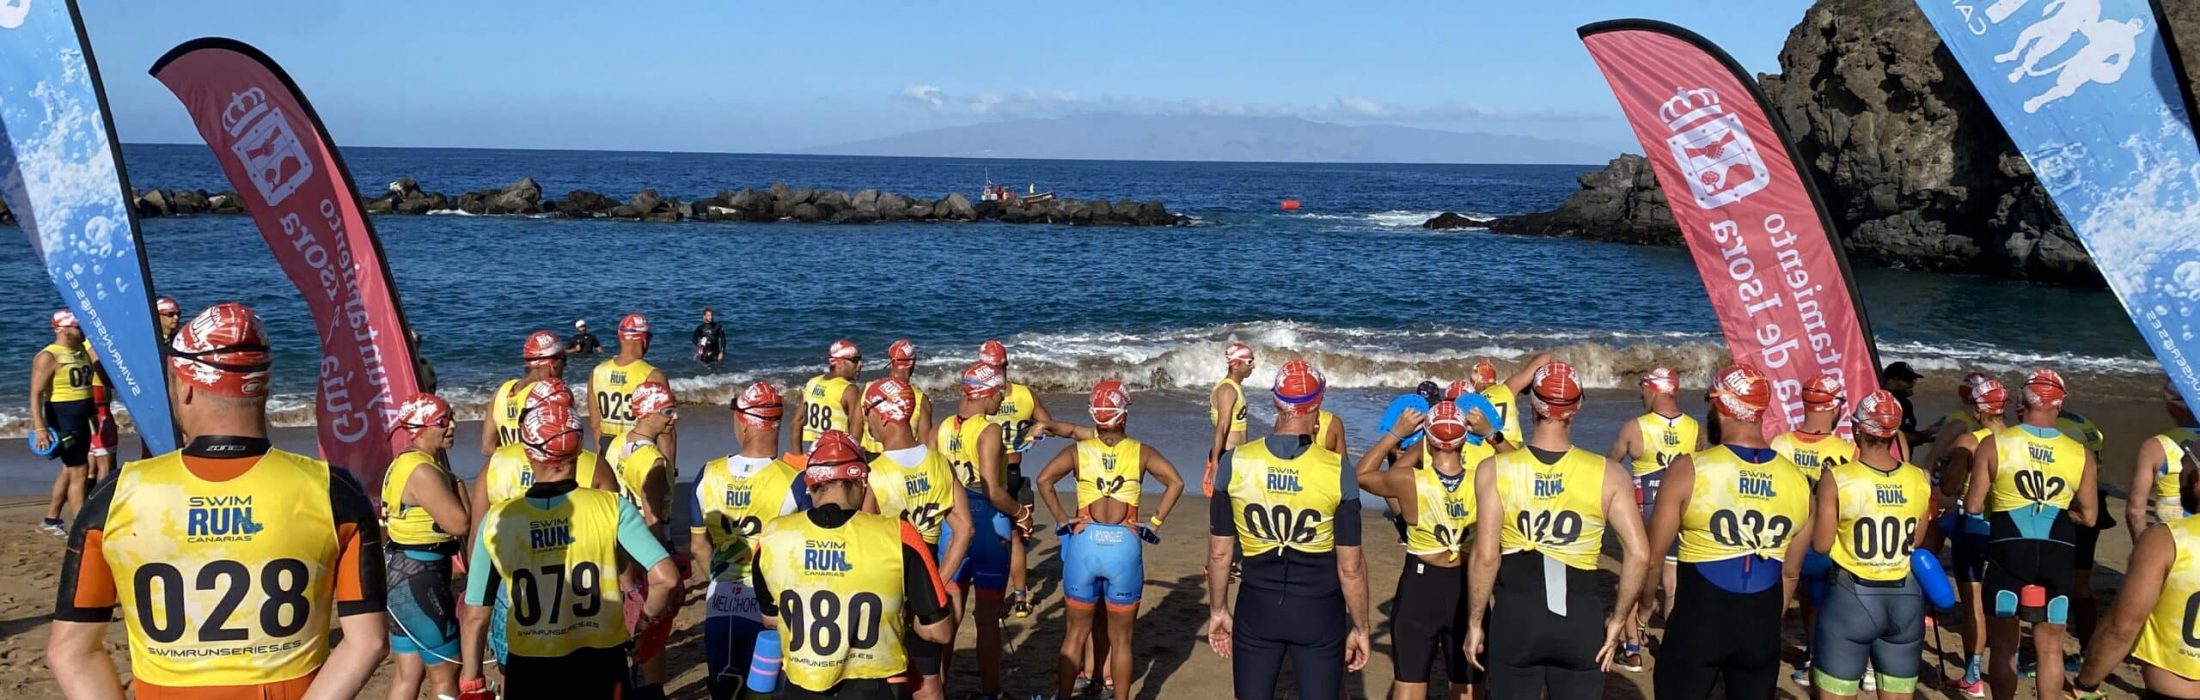 Participantes al swimrun de Playa de San Juan